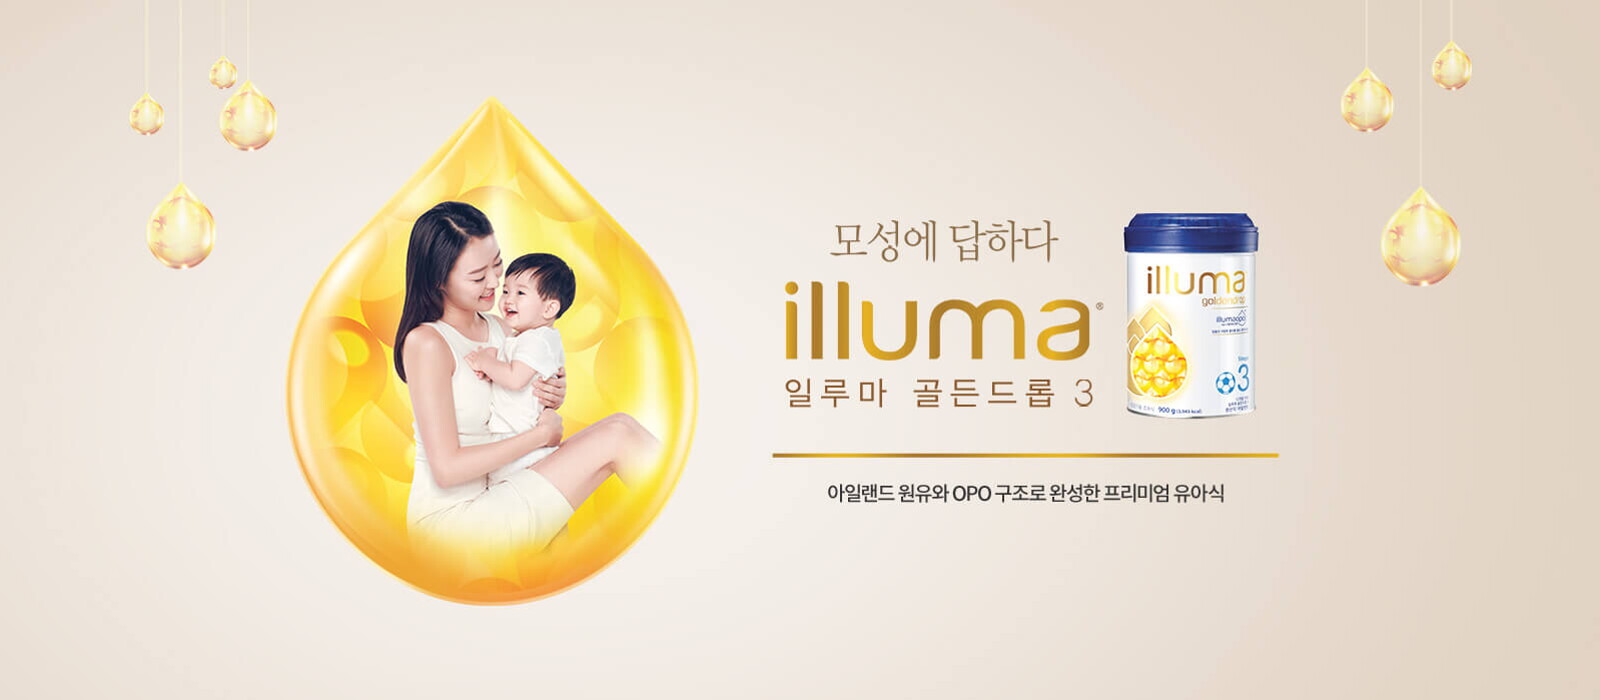 Illuma banner